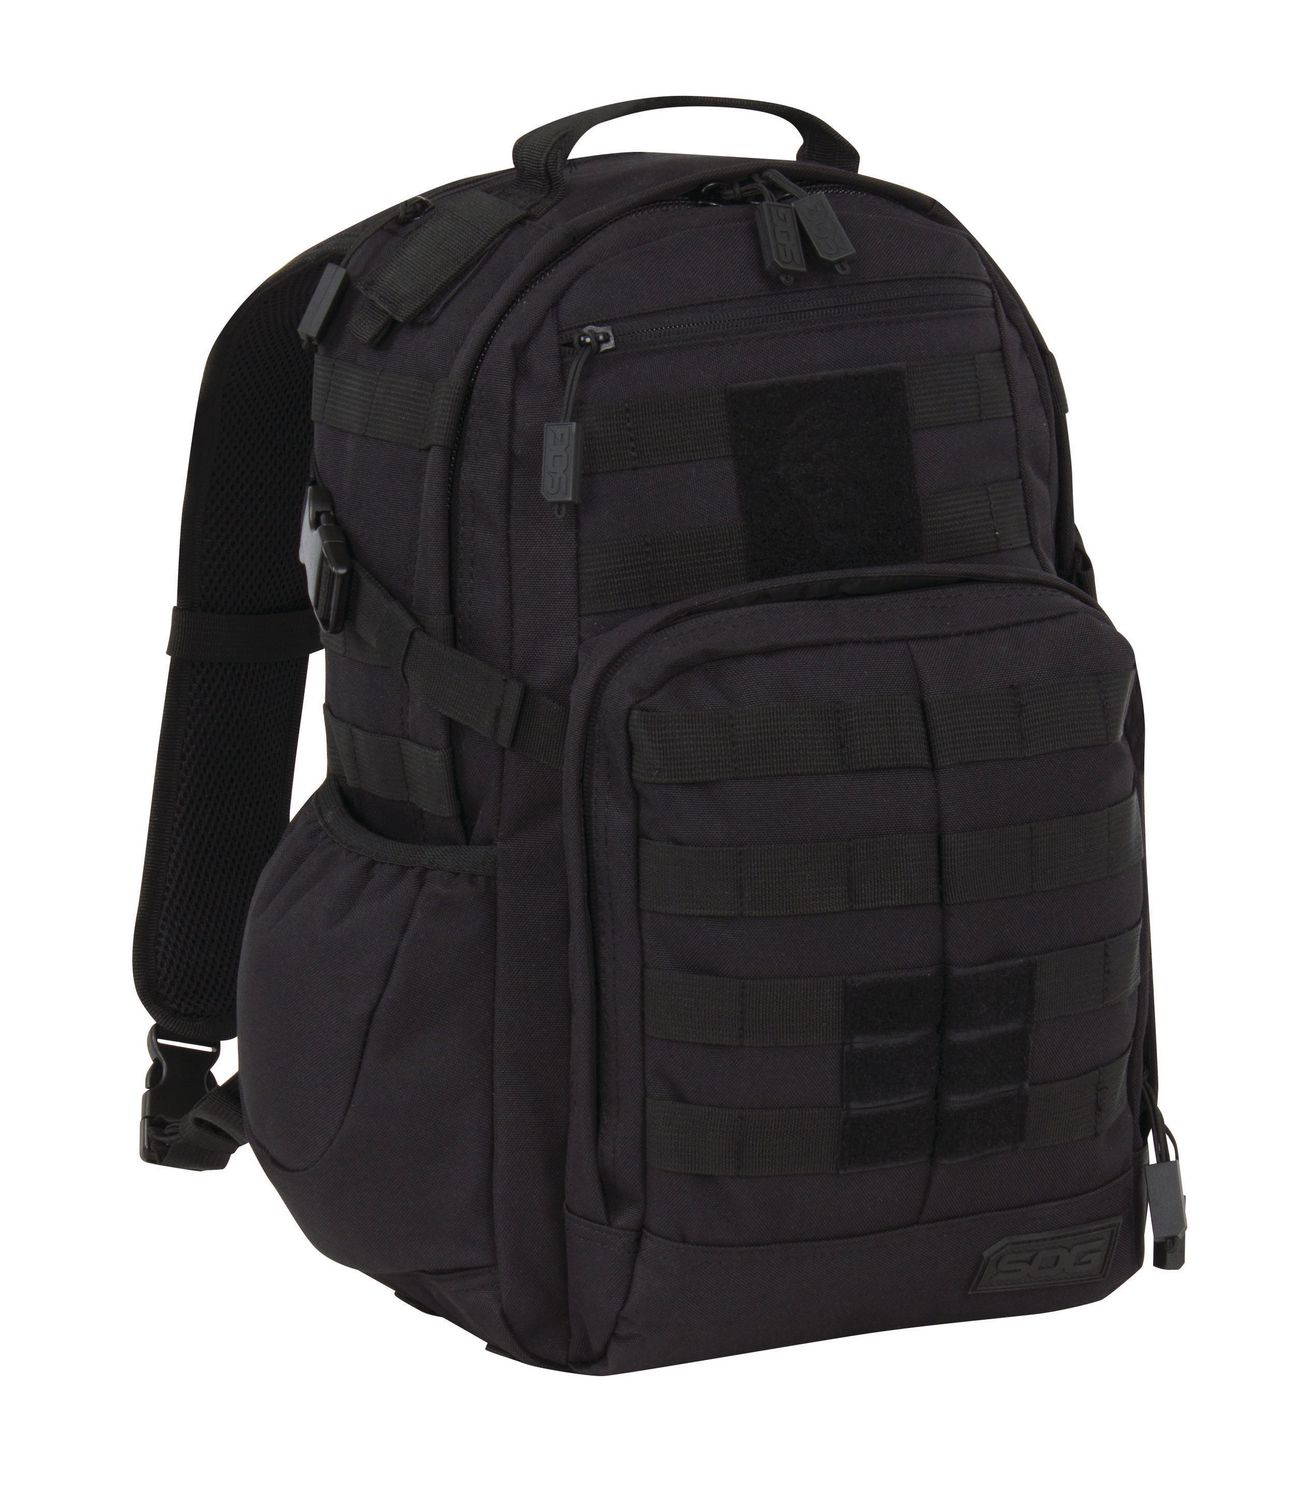 SOG Tactical Backpack - Black | Walmart Canada